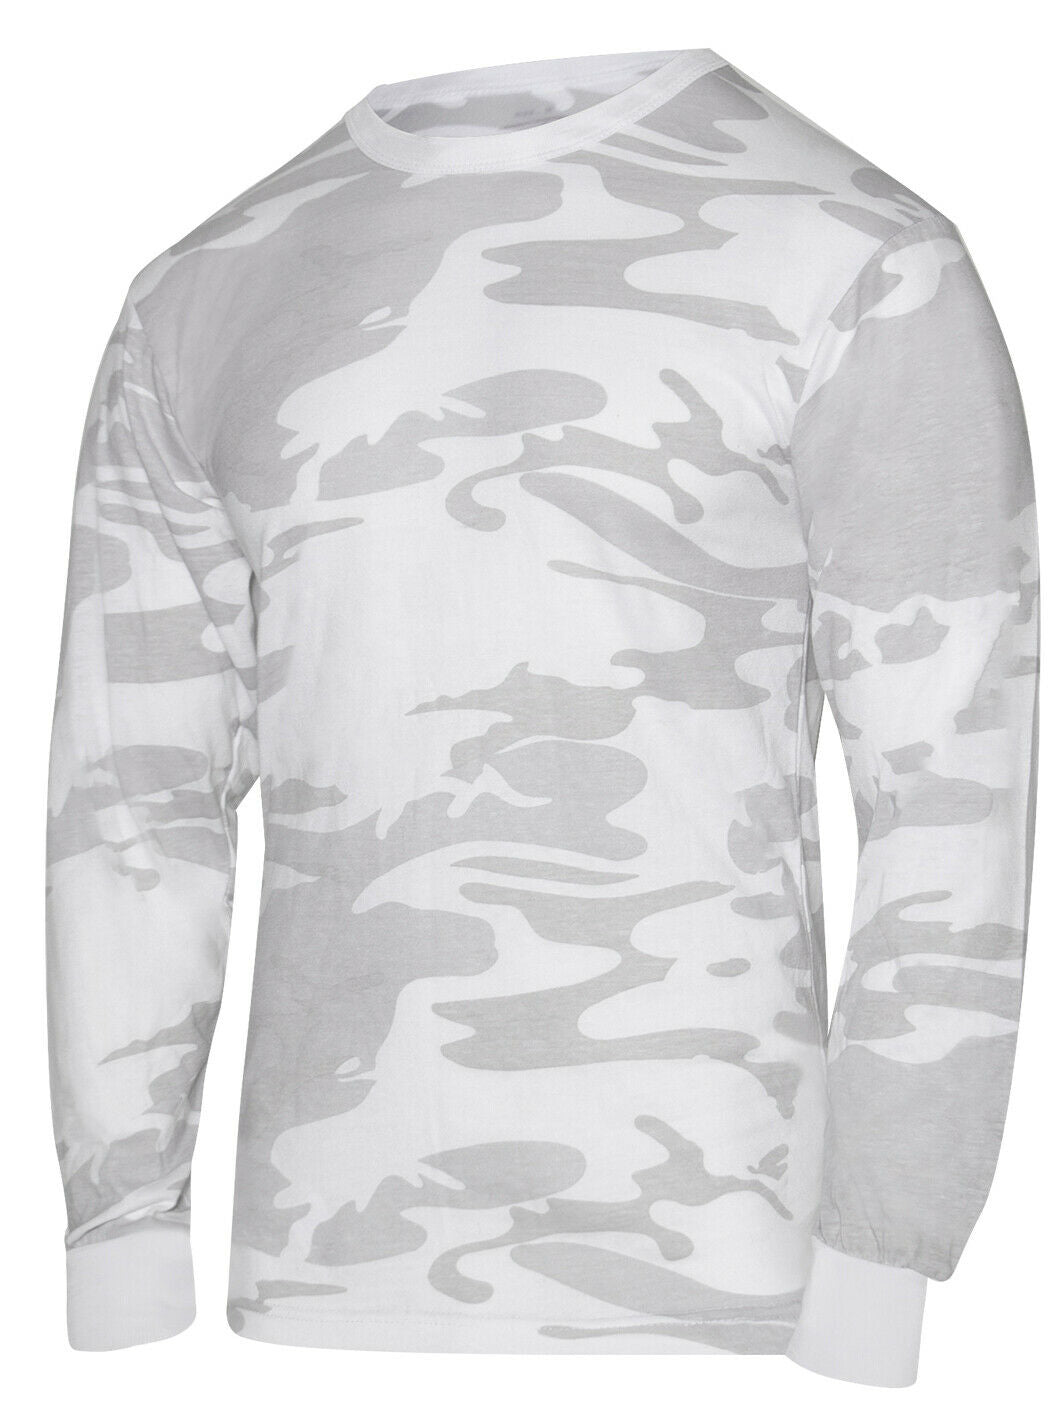 Rothco Long Sleeve Color Camo T-Shirt - White Snow Camo